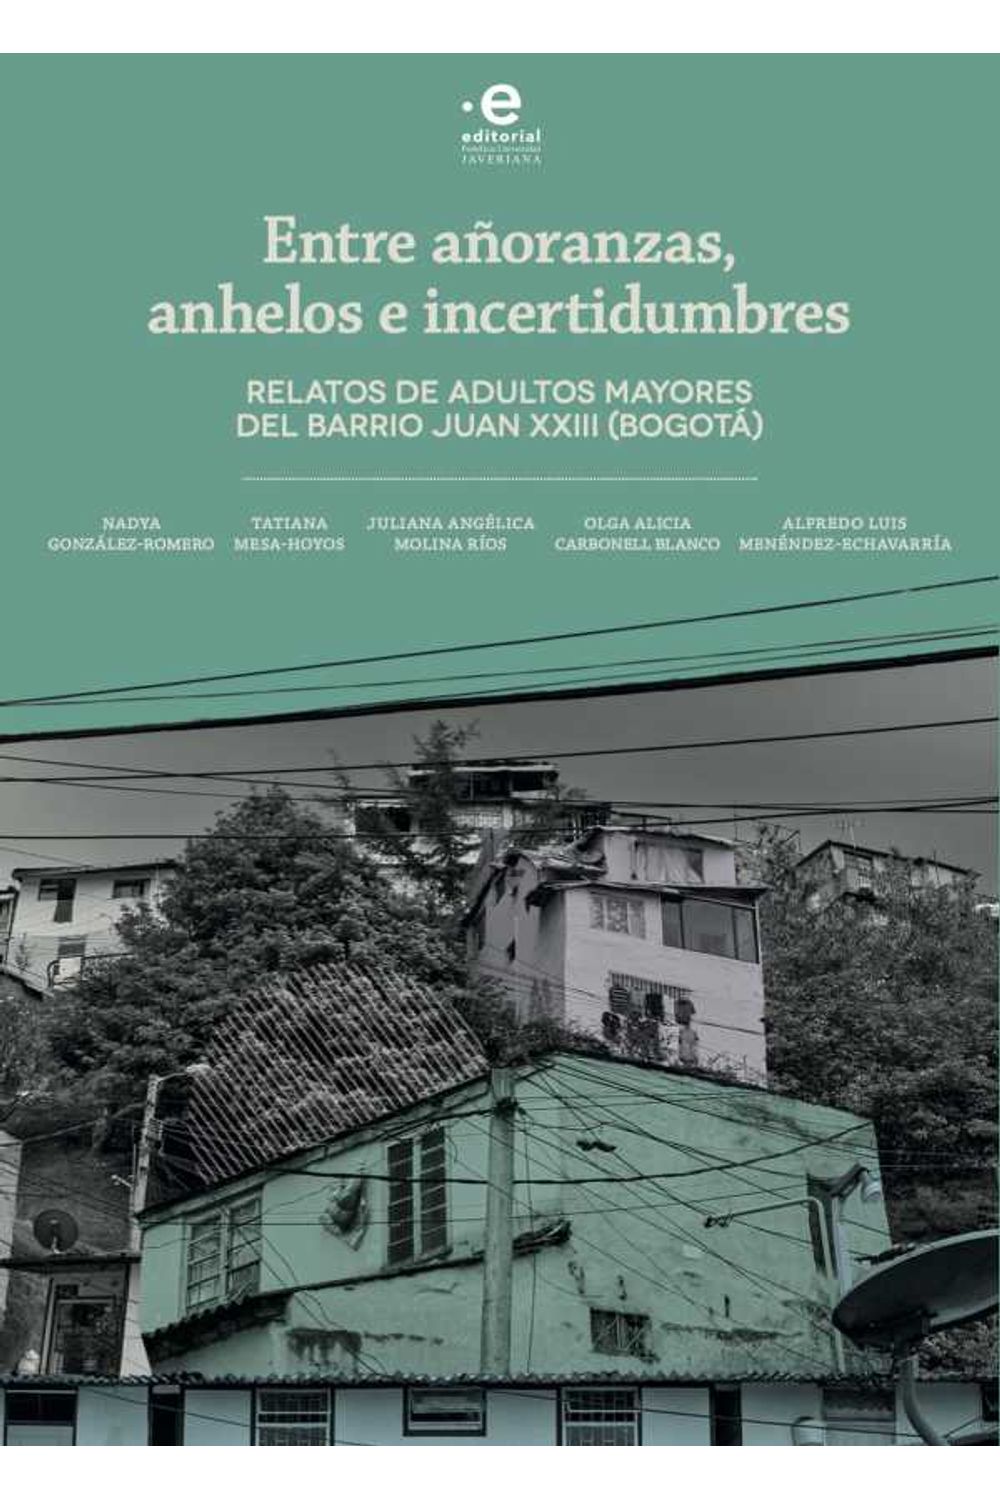 bw-entre-antildeoranzas-anhelos-e-incertidumbres-editorial-pontificia-universidad-javeriana-9789587815832